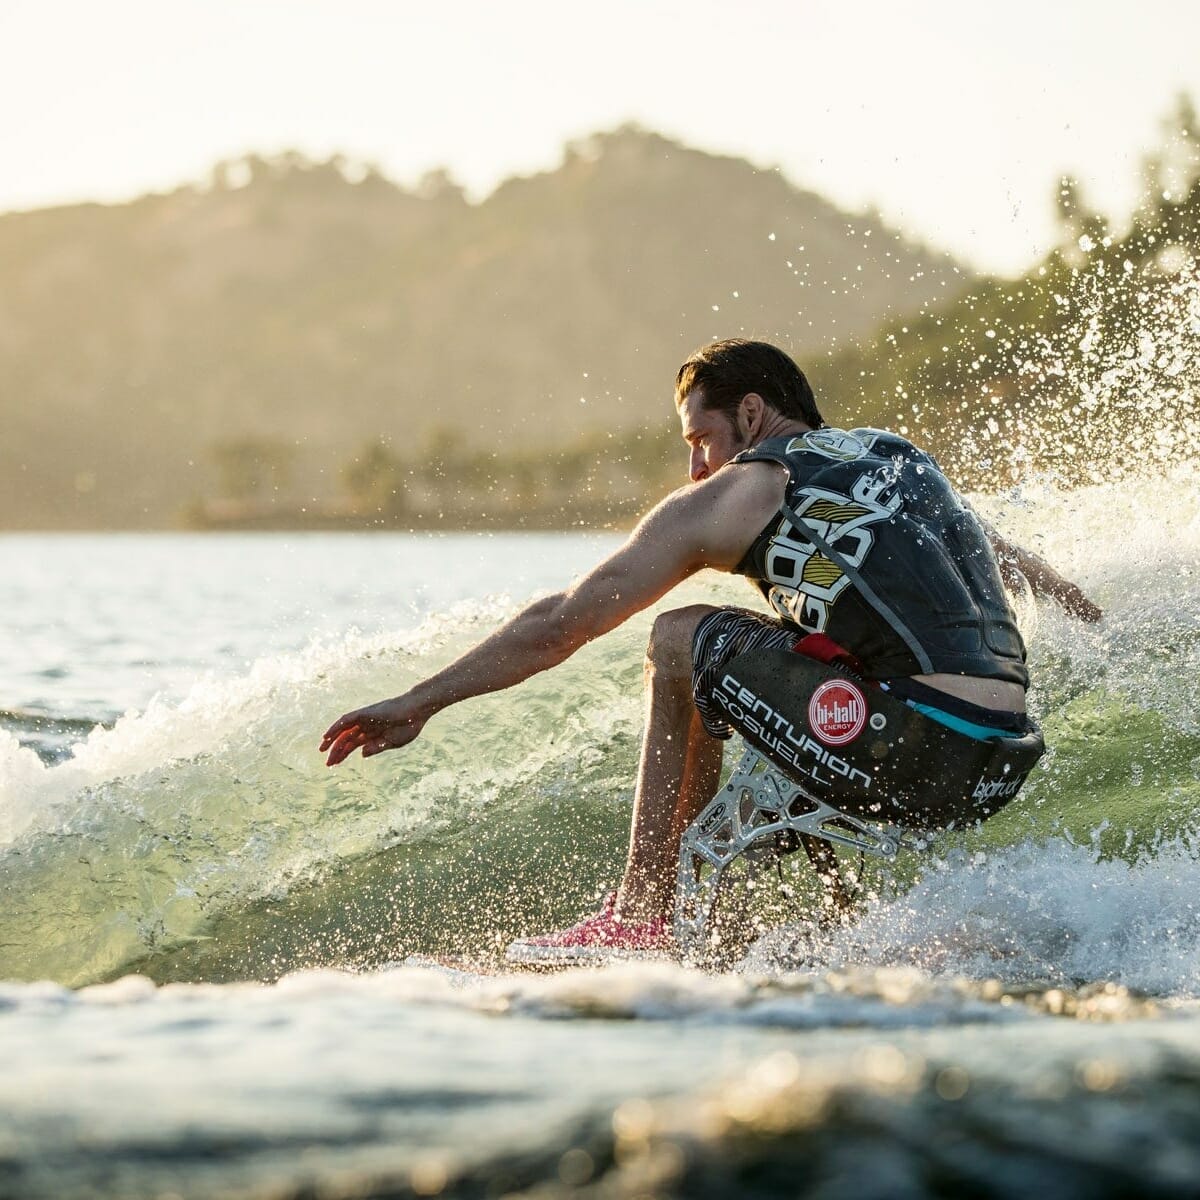 Grant Korgan wakesurfing